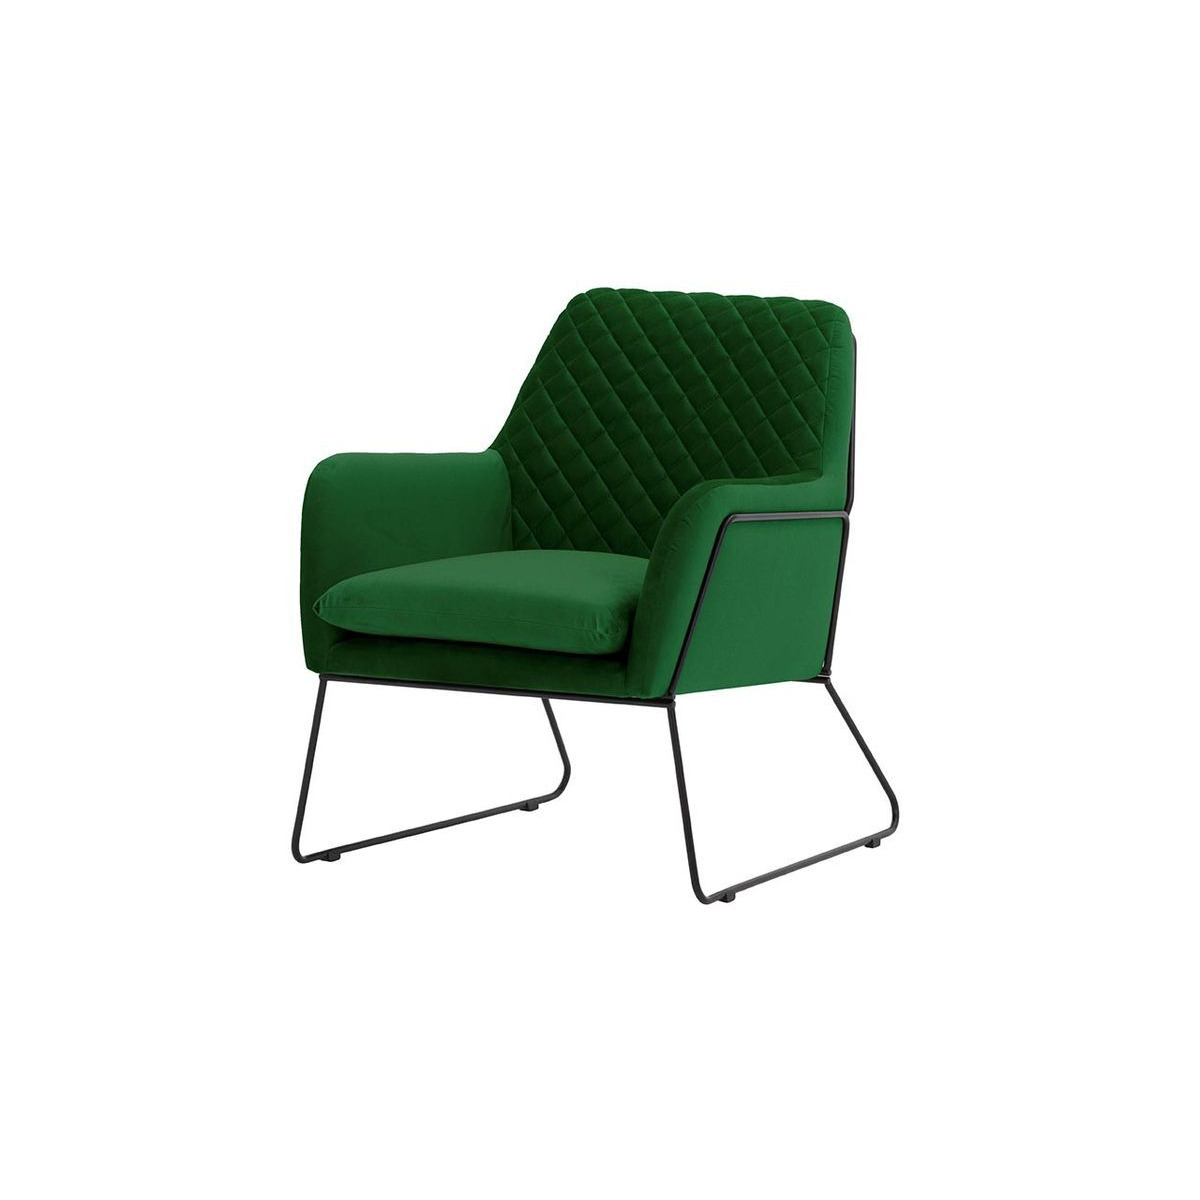 Foxe Metal Frame Armchair with Stitching, dark green, Leg colour: black metal frame - image 1